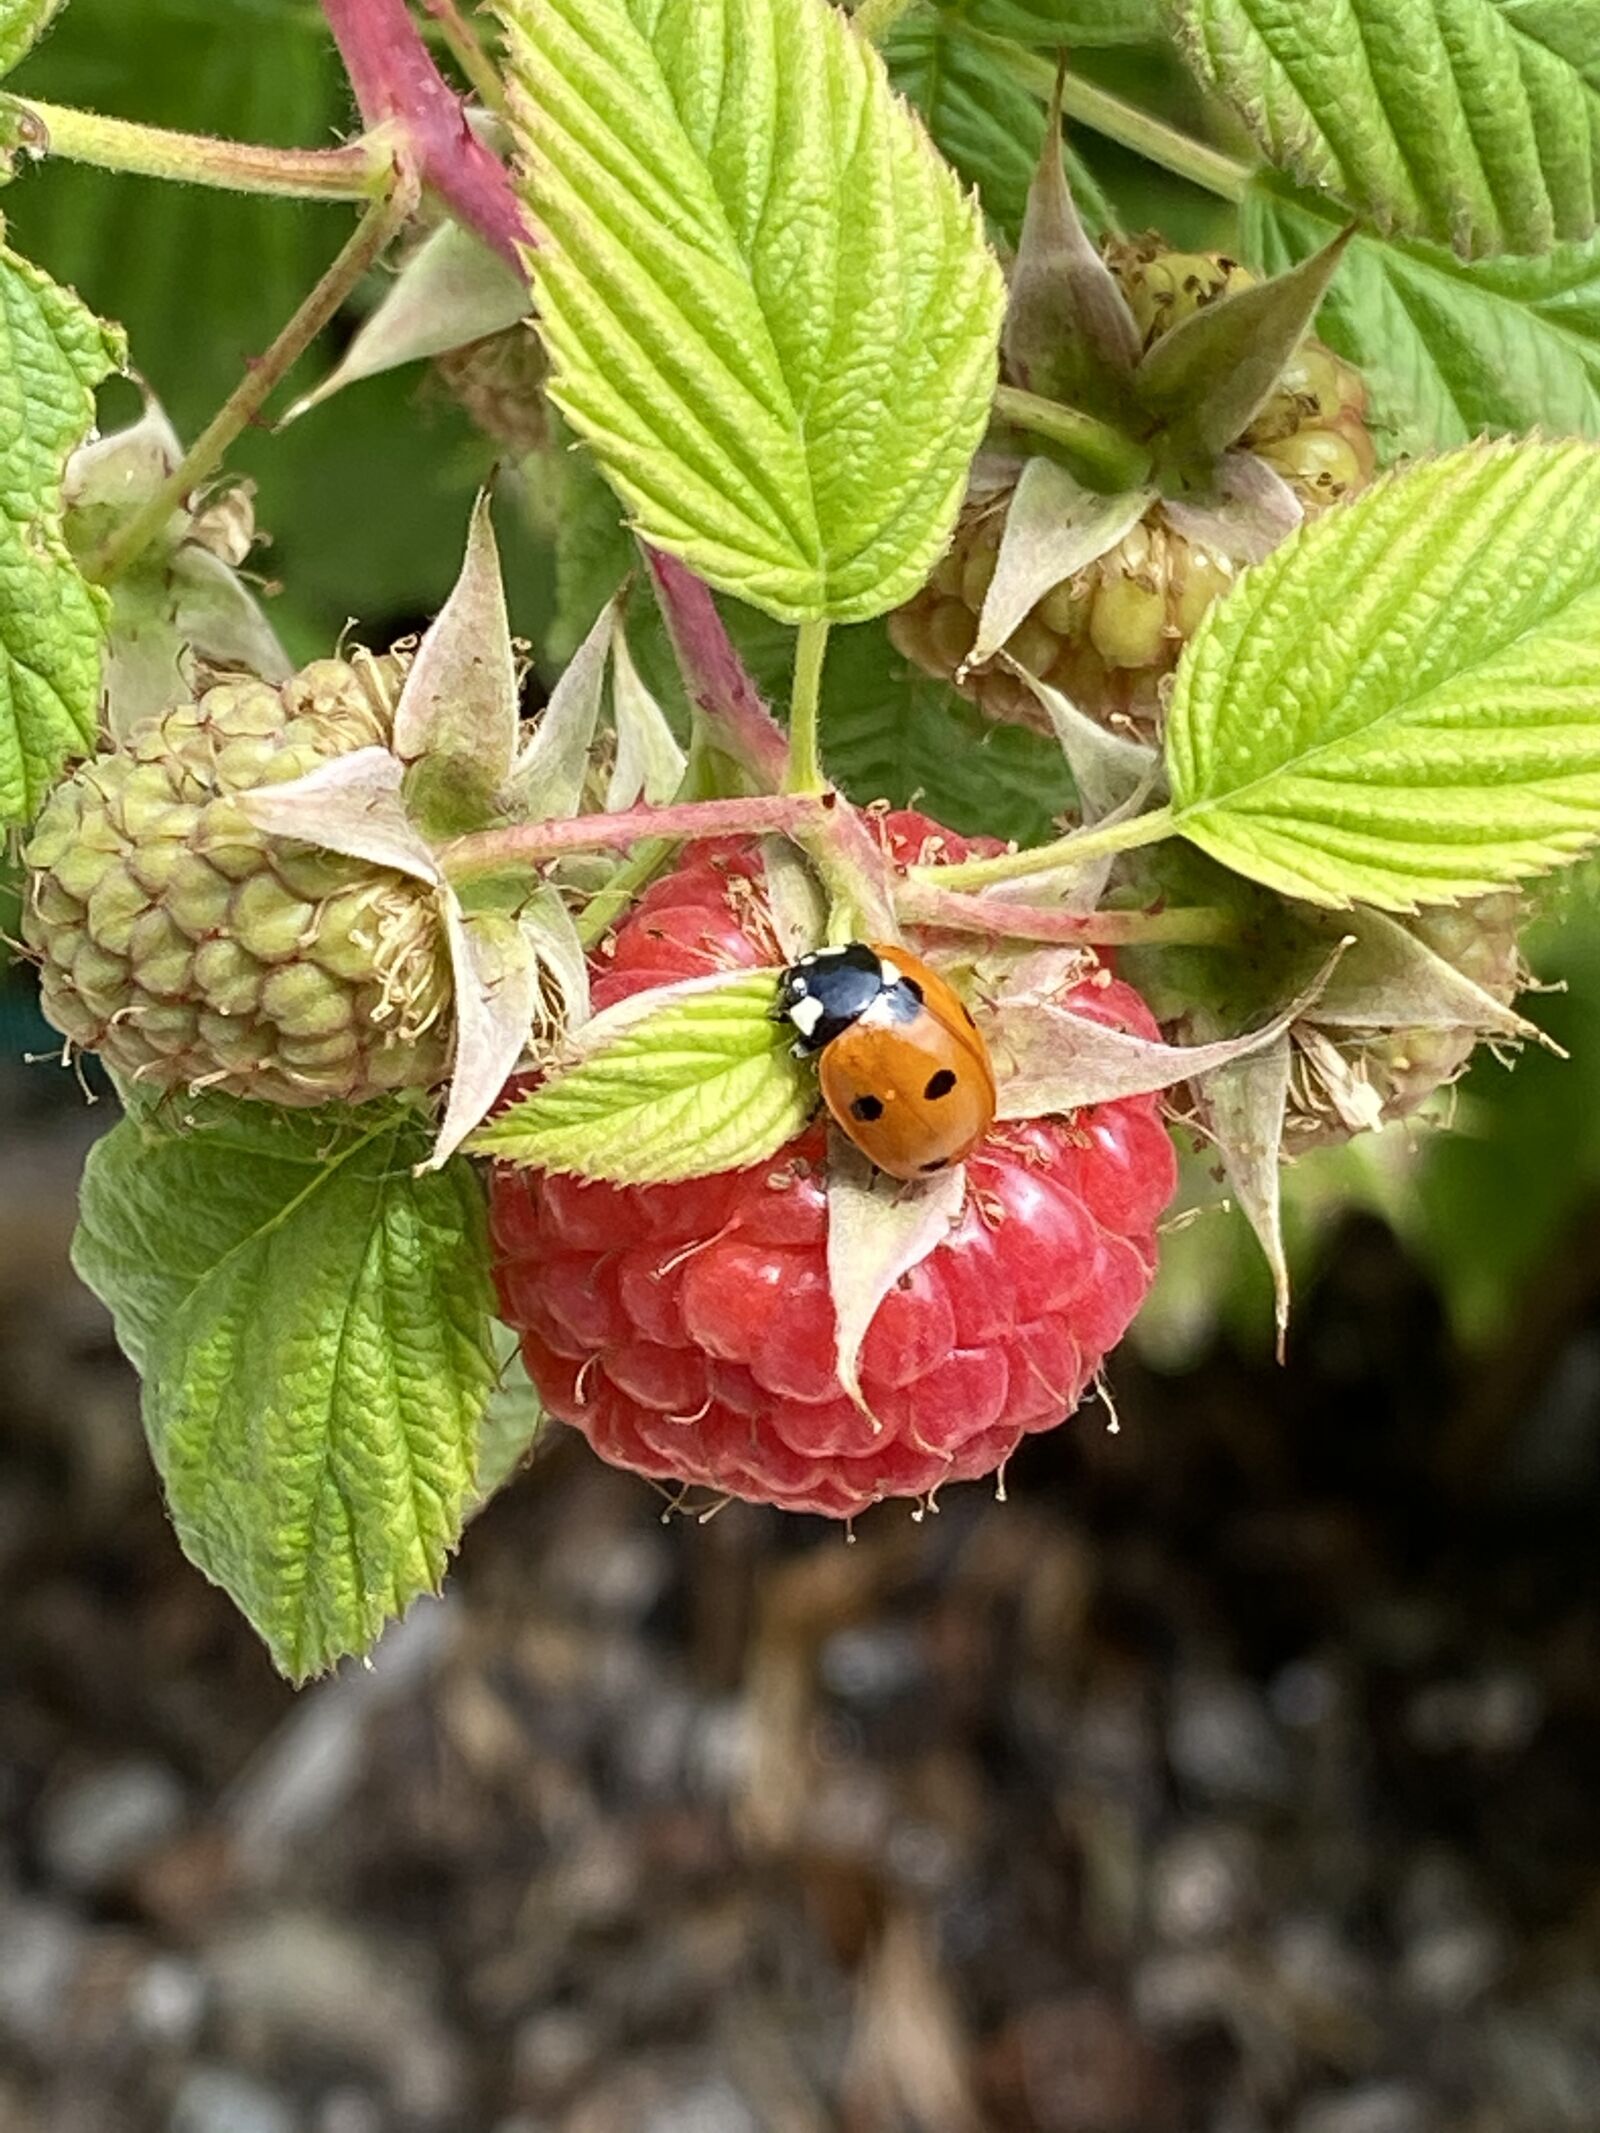 iPhone 11 Pro Max back triple camera 4.25mm f/1.8 sample photo. Ladybug, raspberry, nature photography